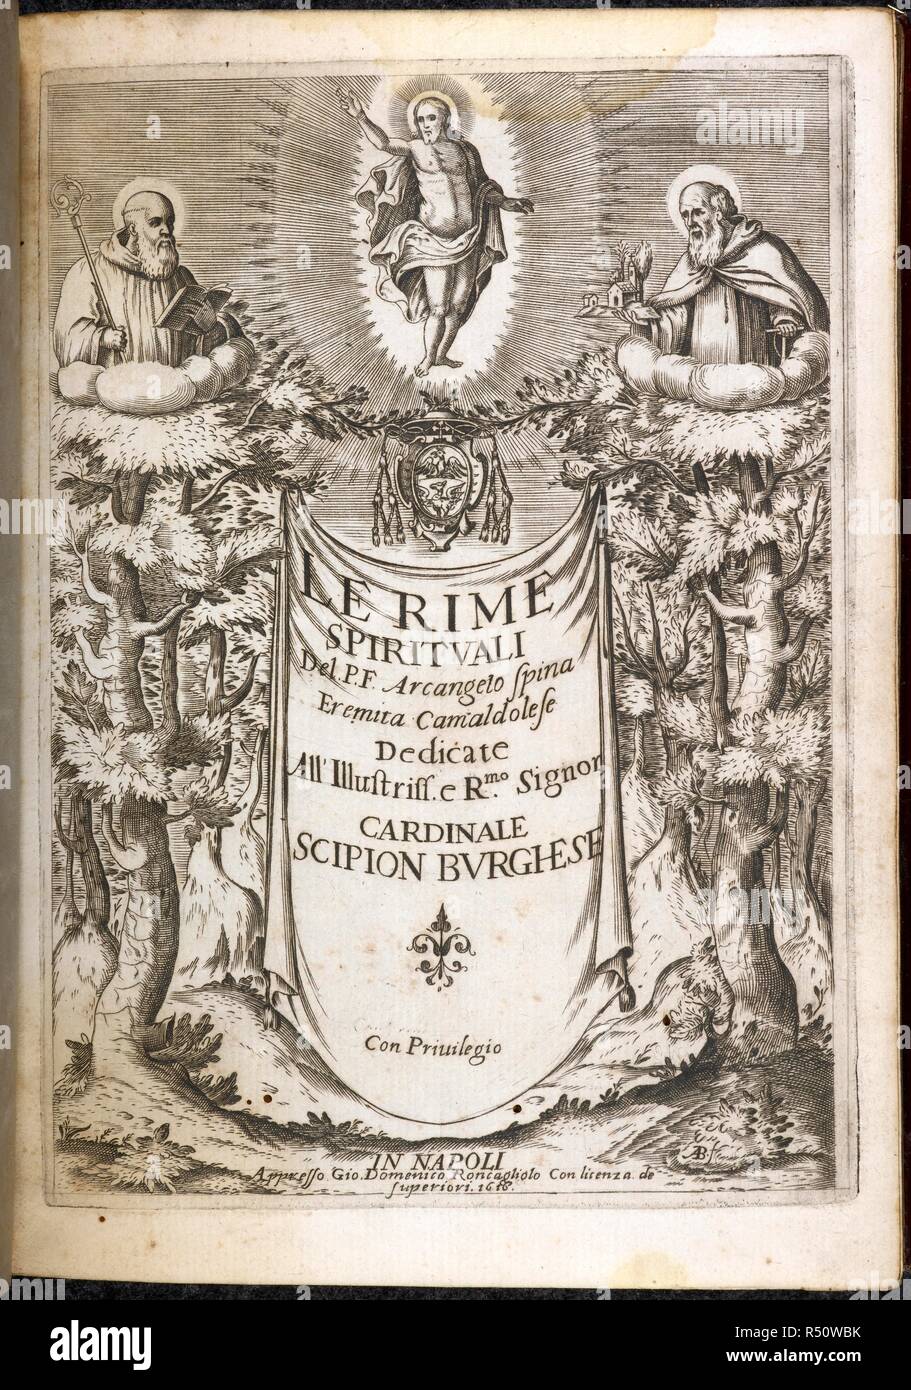 Title page of Le Rime Spirituali . Le Rime Spirituali del P. F. A. Spina, etc. Naples, 1616. Source: C.46.e.14 title page. Language: Italian. Stock Photo